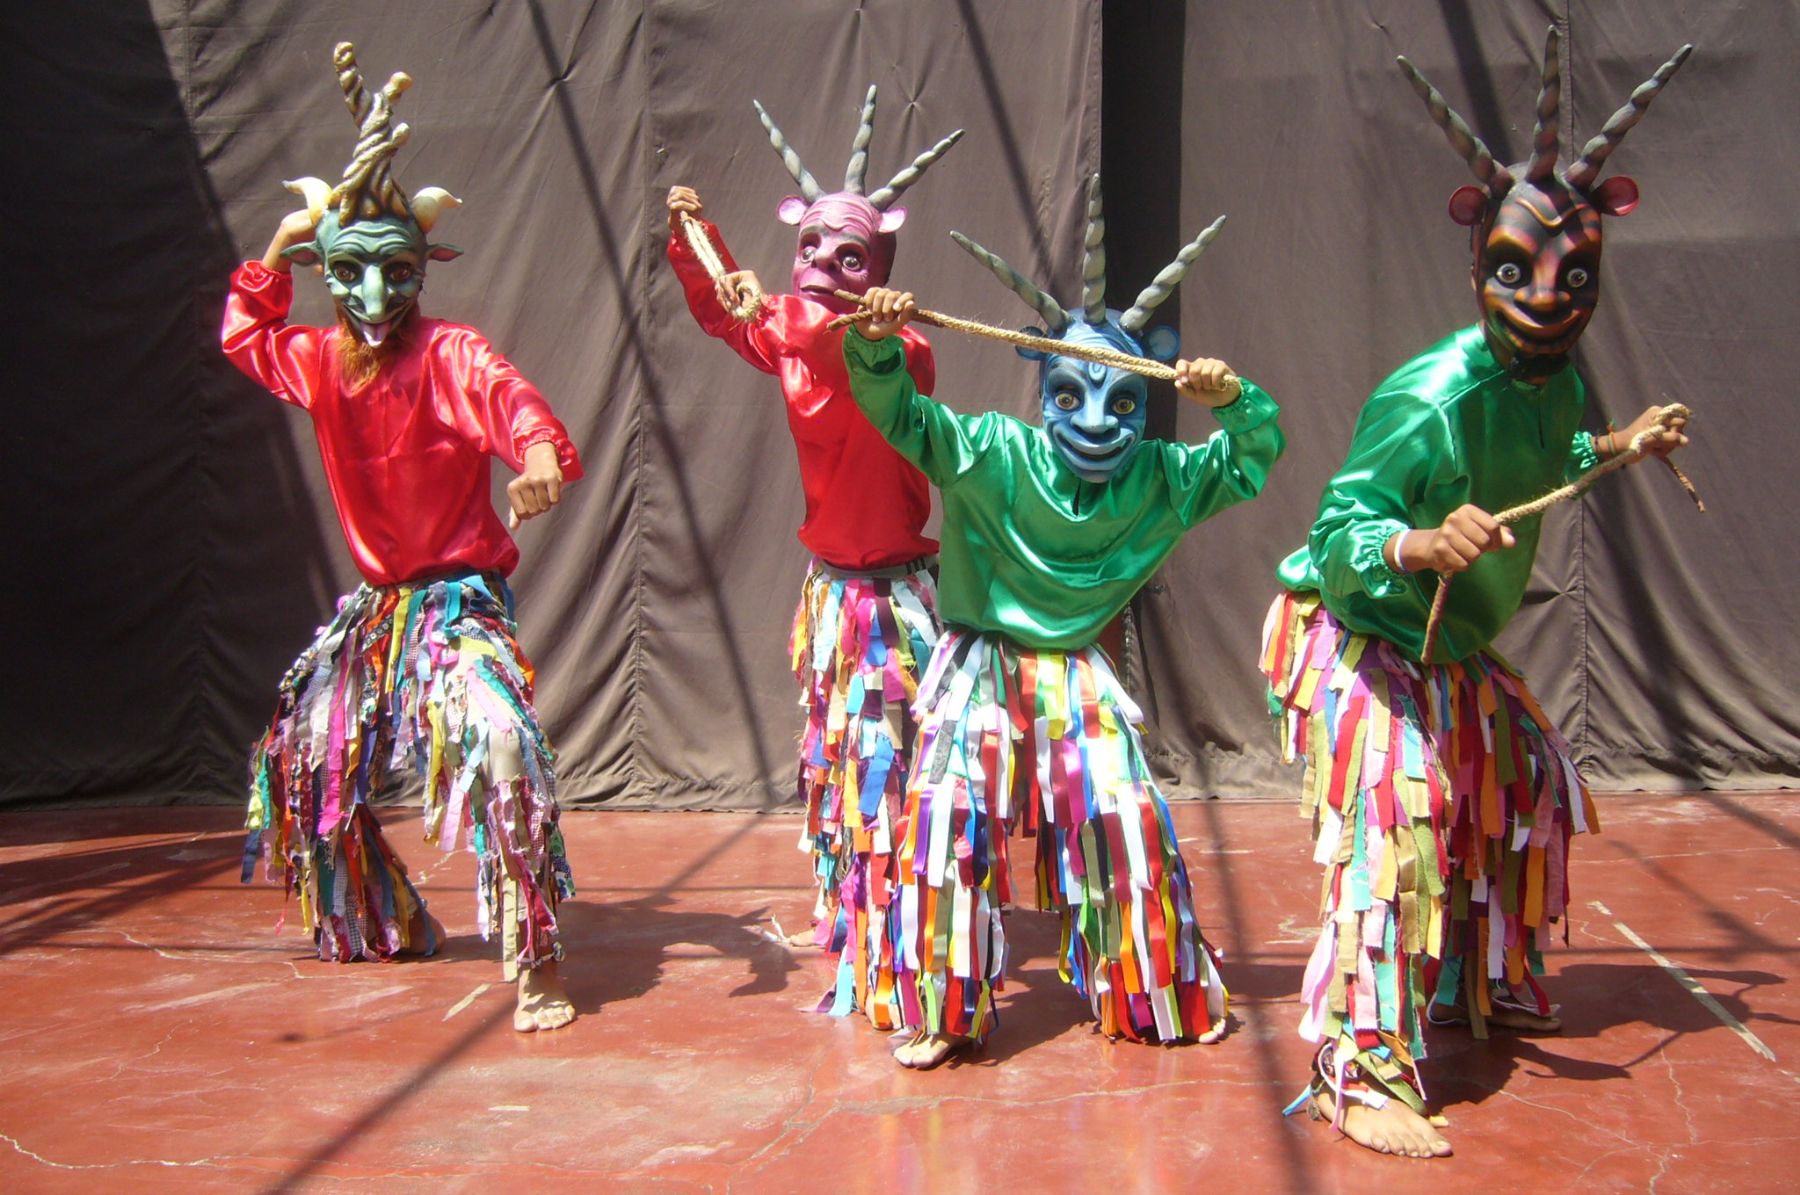 Danza de los diablitos afronorteños se lucirá en megaevento cultural "Mectizaña" en Lambayeque.